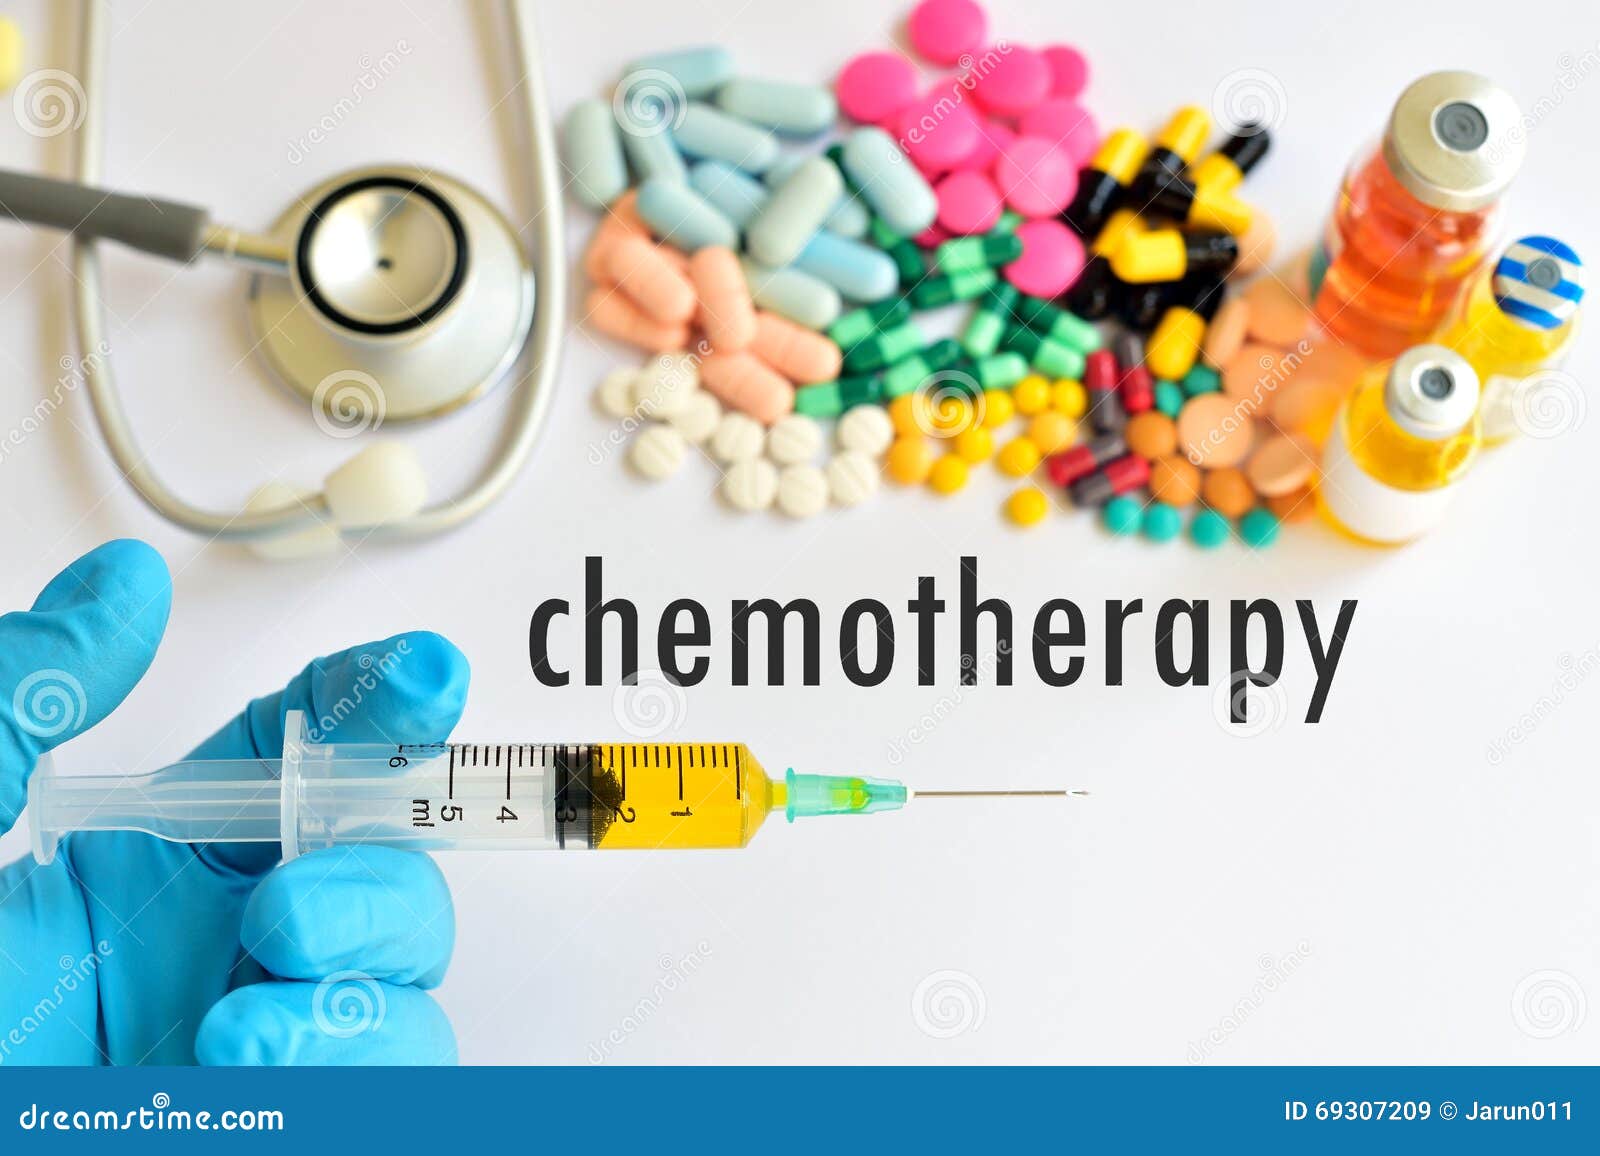 chemotherapy 